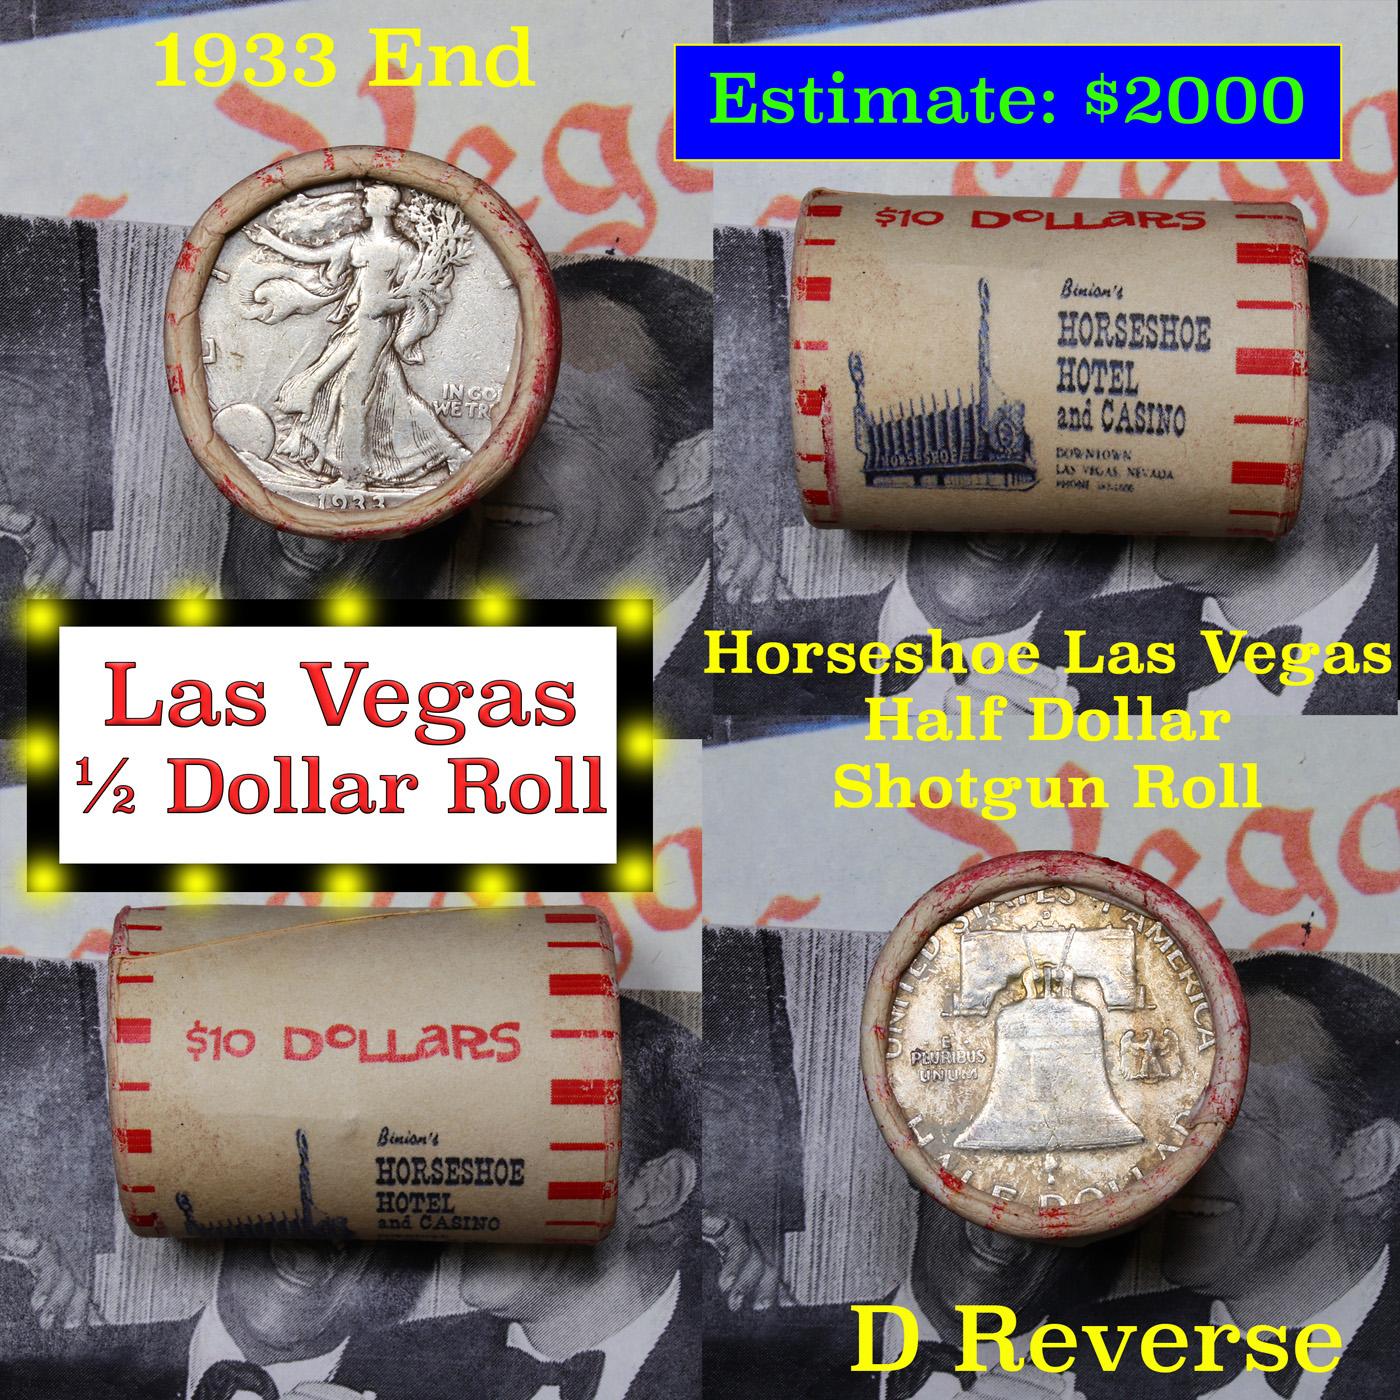 ***Auction Highlight*** Old Casino 50c Roll $10 Halves Horseshoe Hotel Vegas 1933 Walker & 'D' Frank